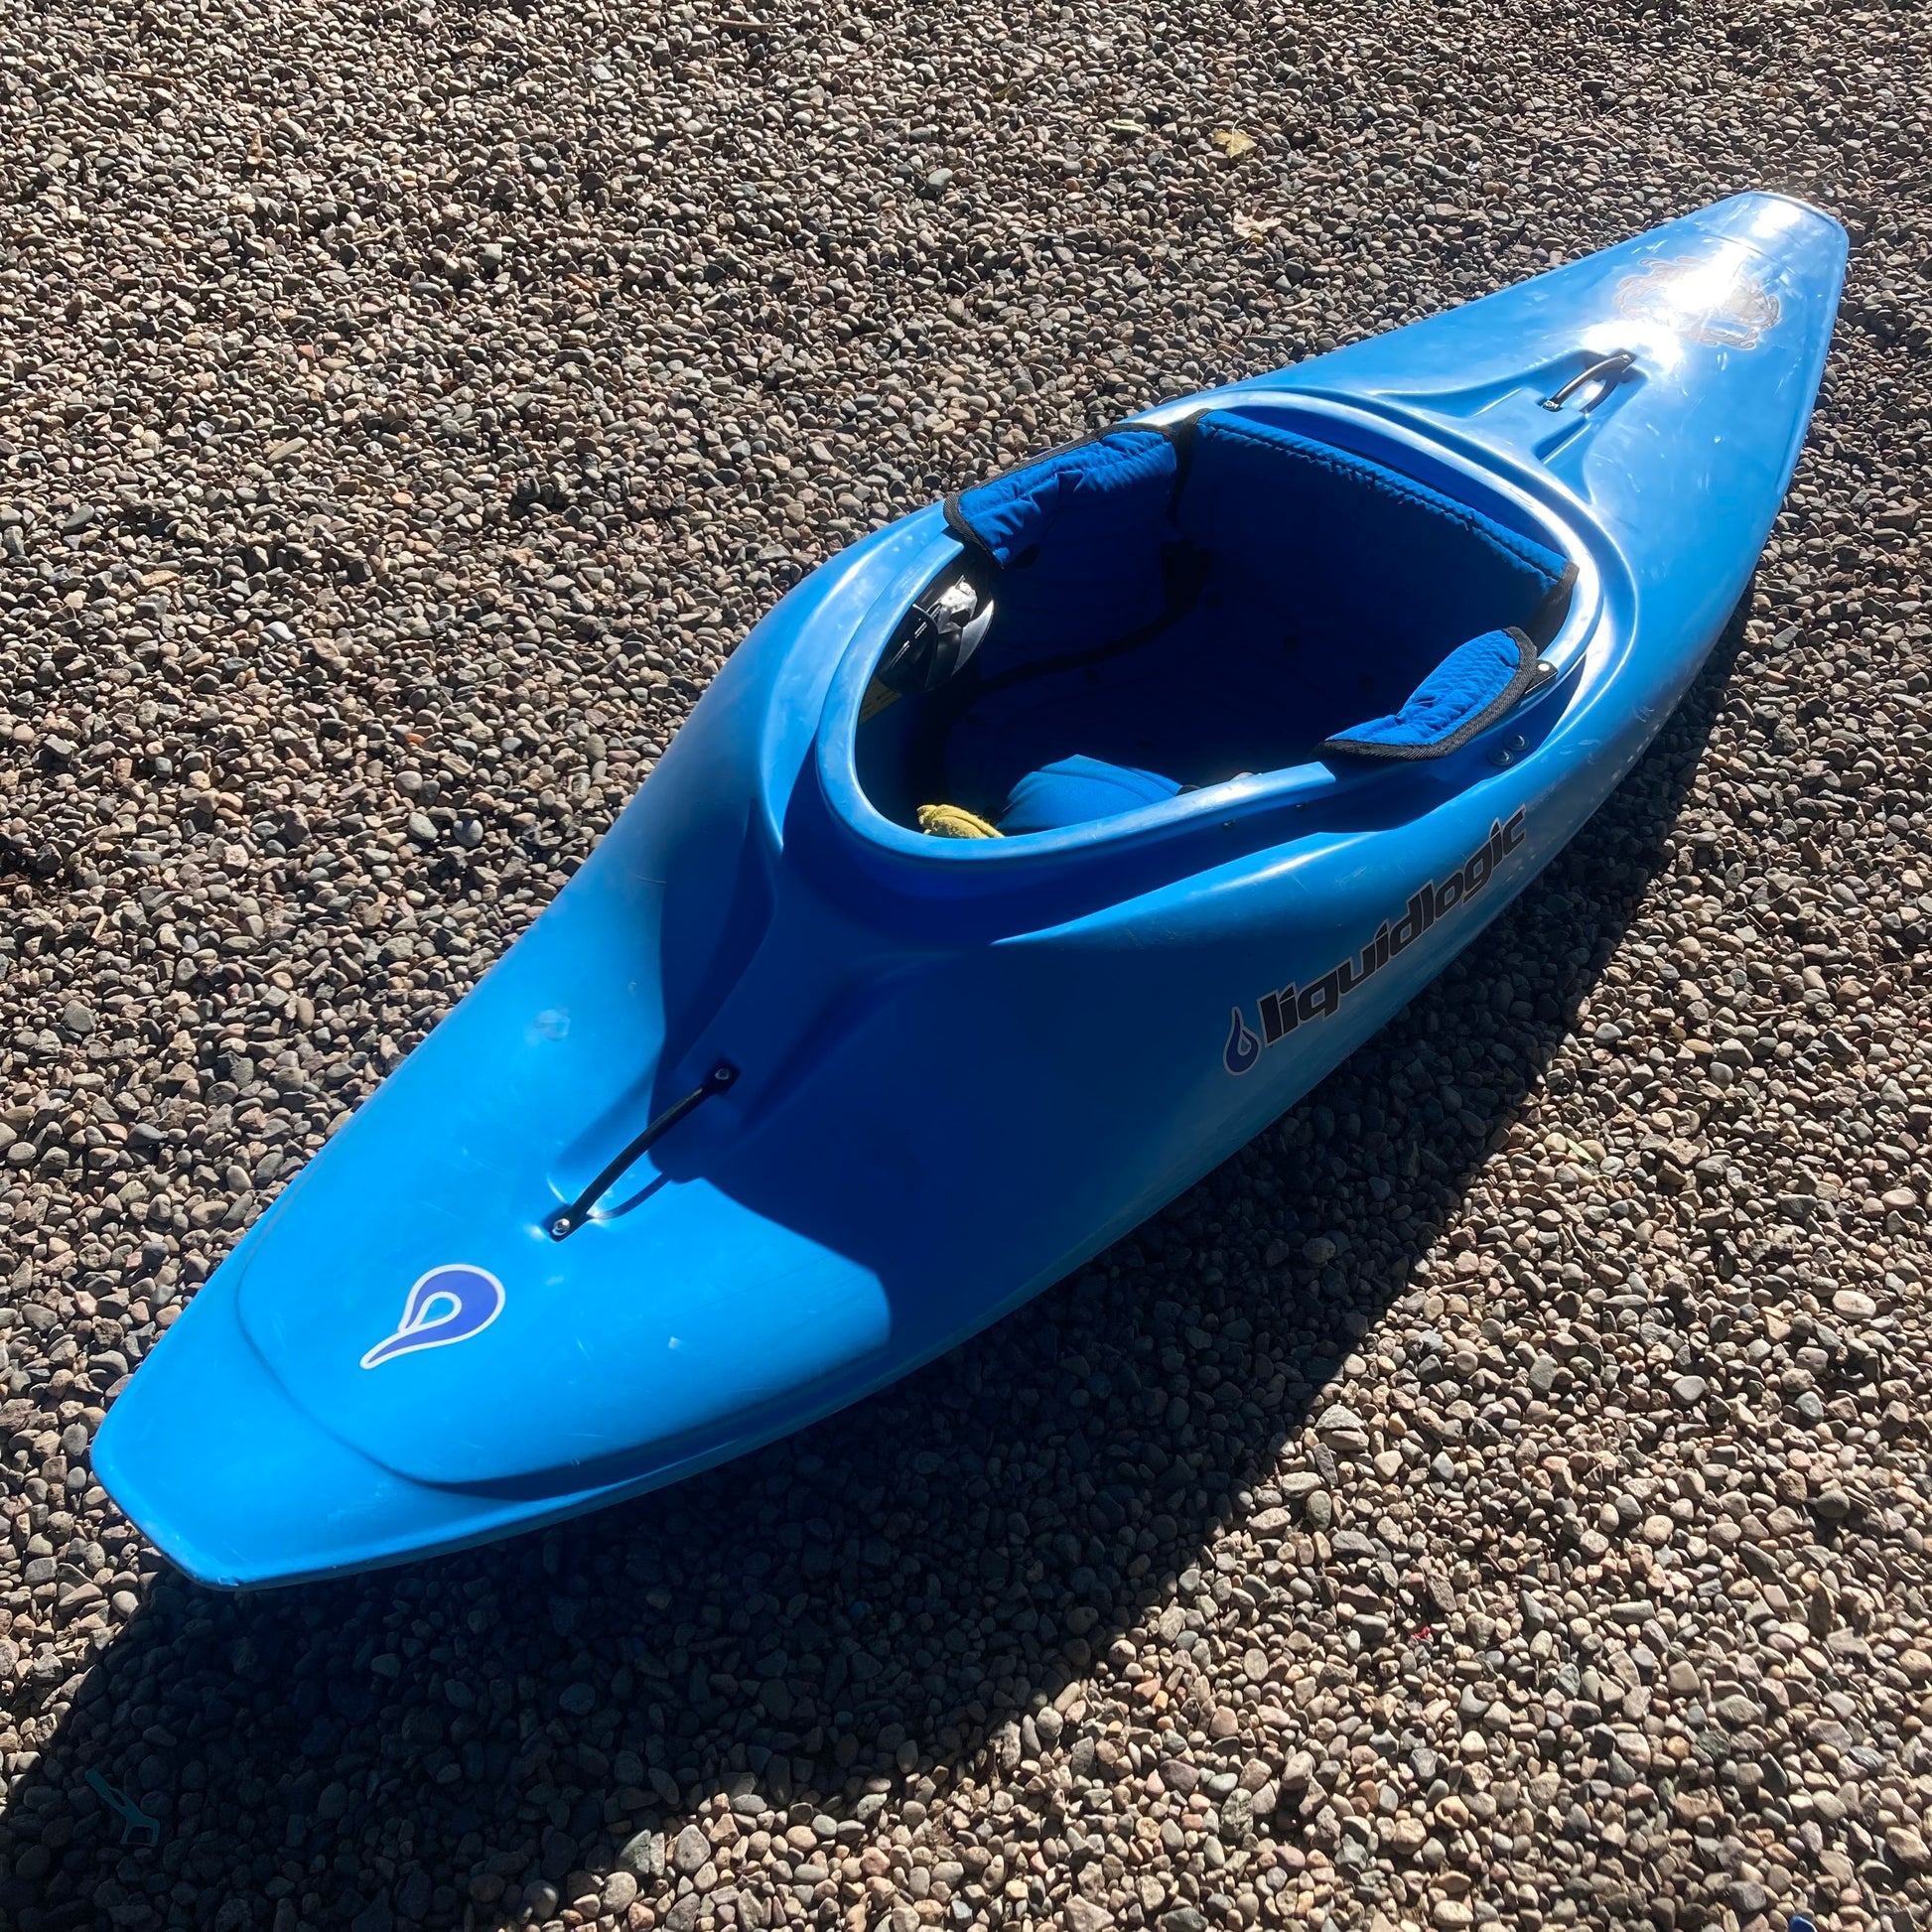 A blue LiquidLogic kayak sitting on gravel.